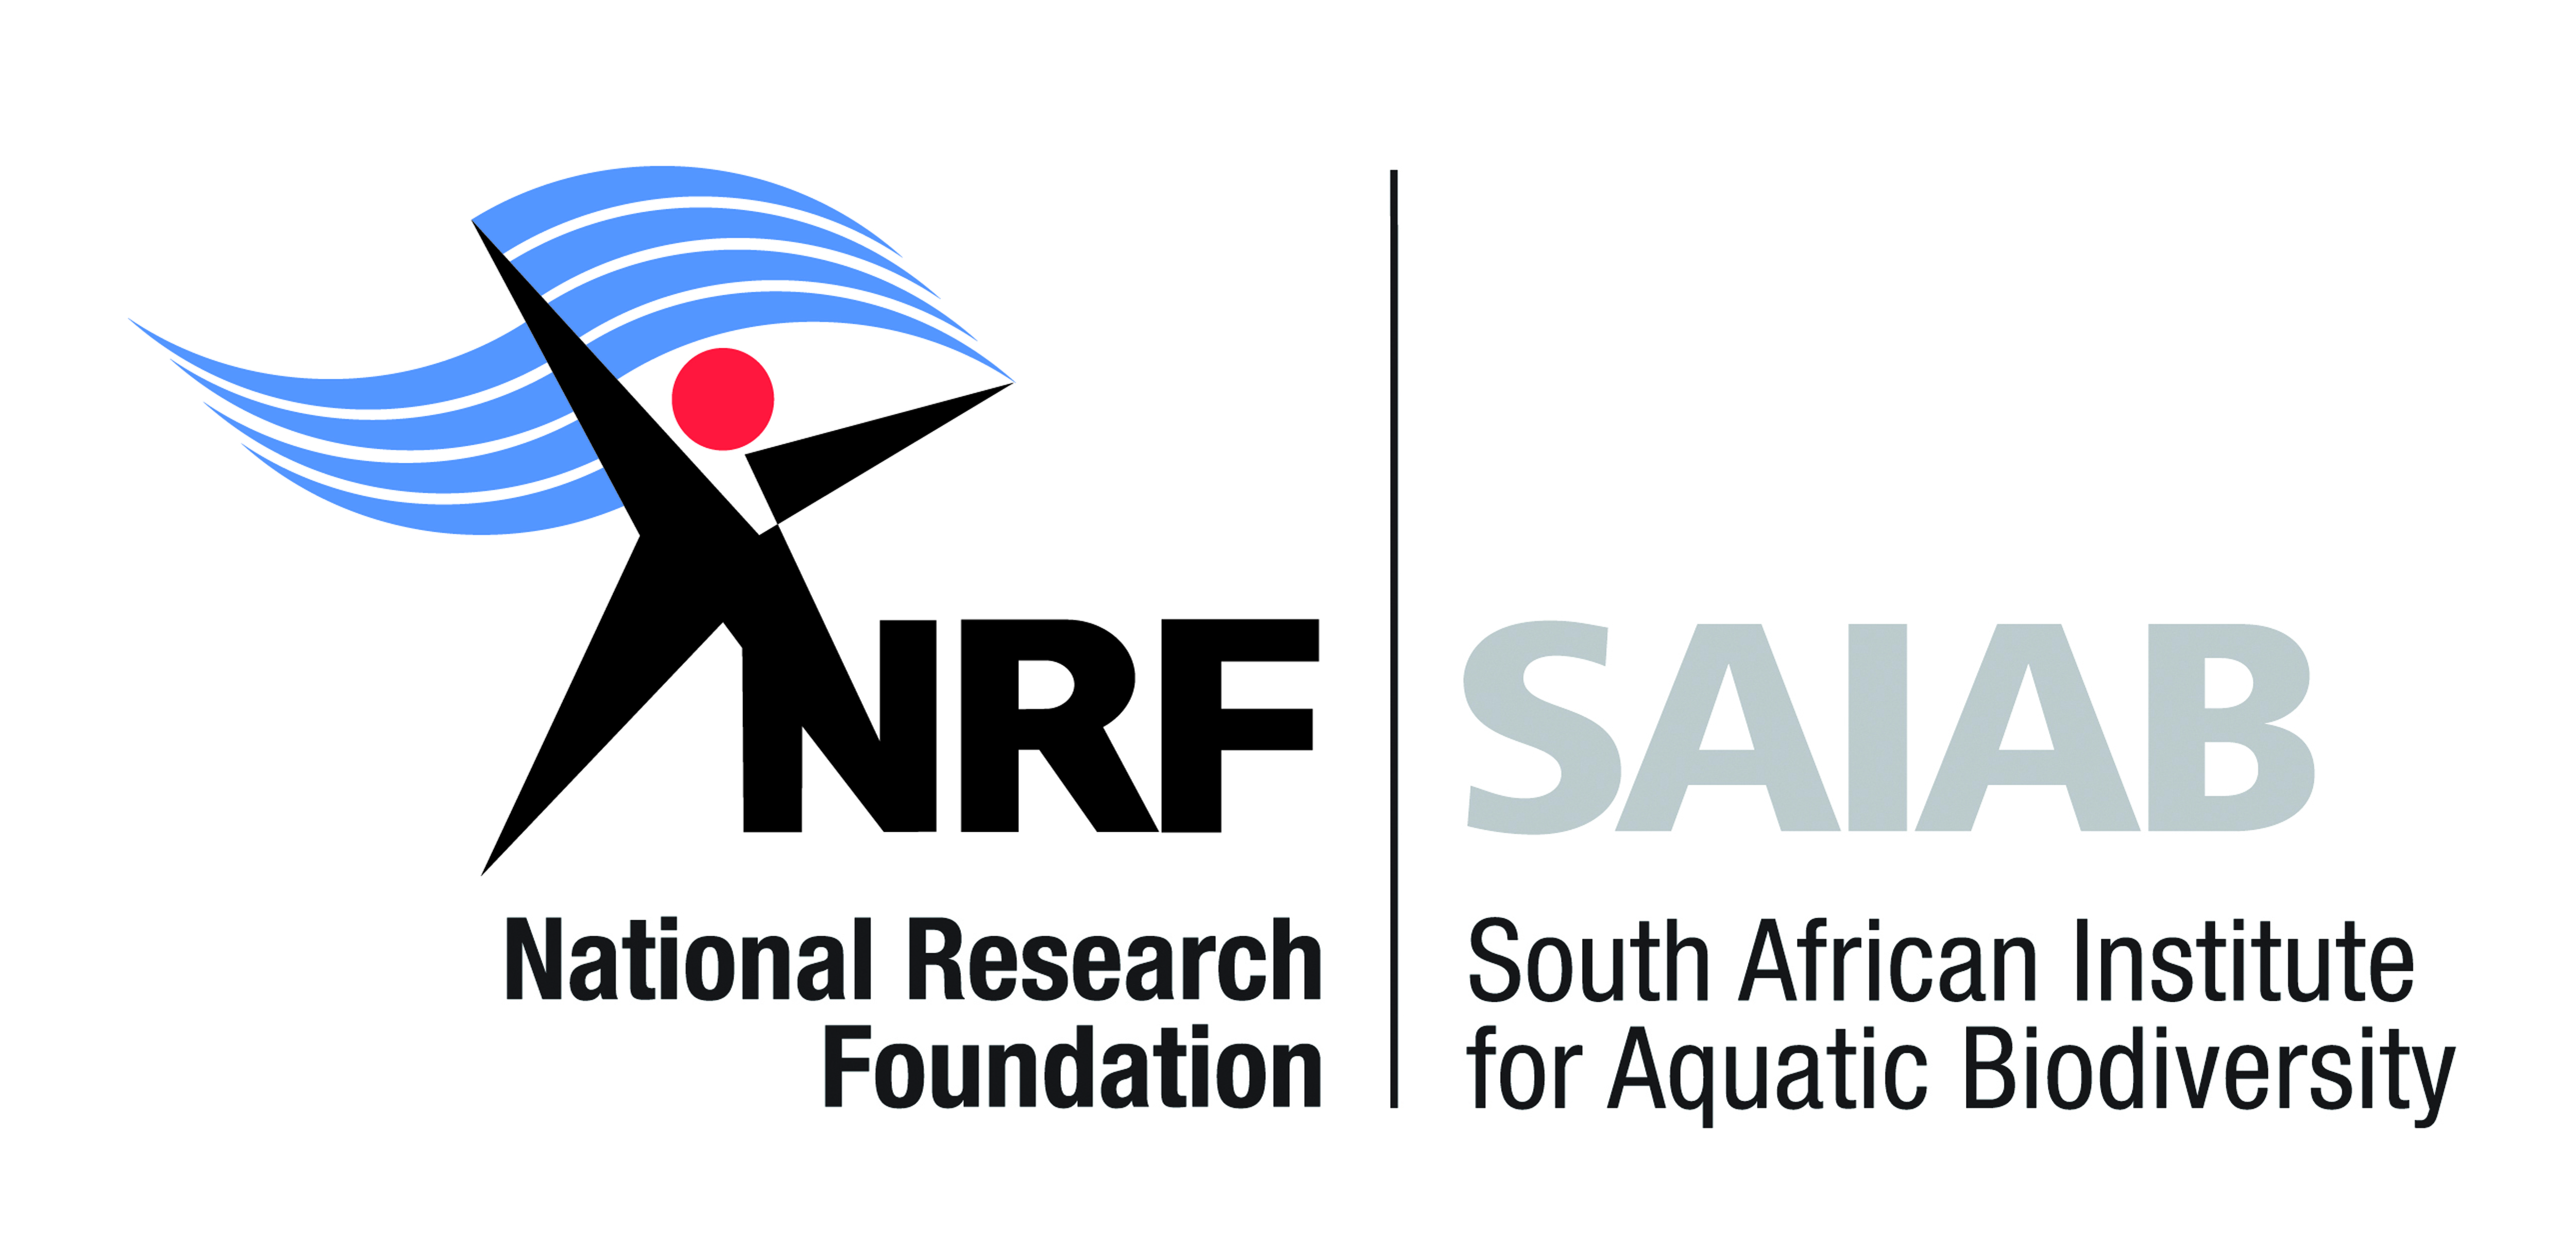 South African Institute for Aquatic Biodiversity (SAIAB)